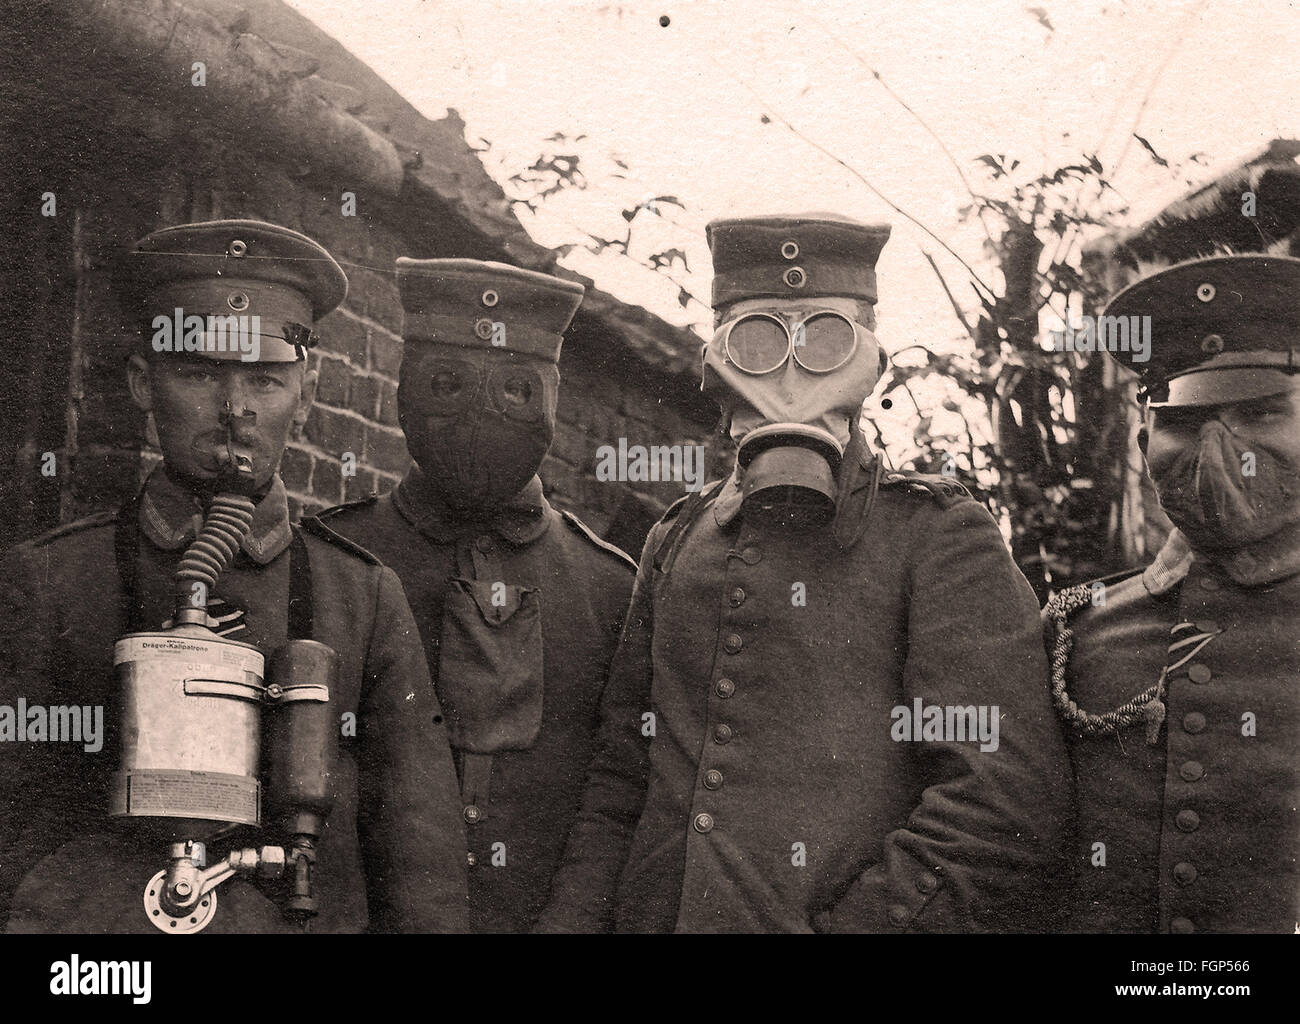 Battle of Verdun 1916 - German Soldiers with strange gas mask Stock Photo